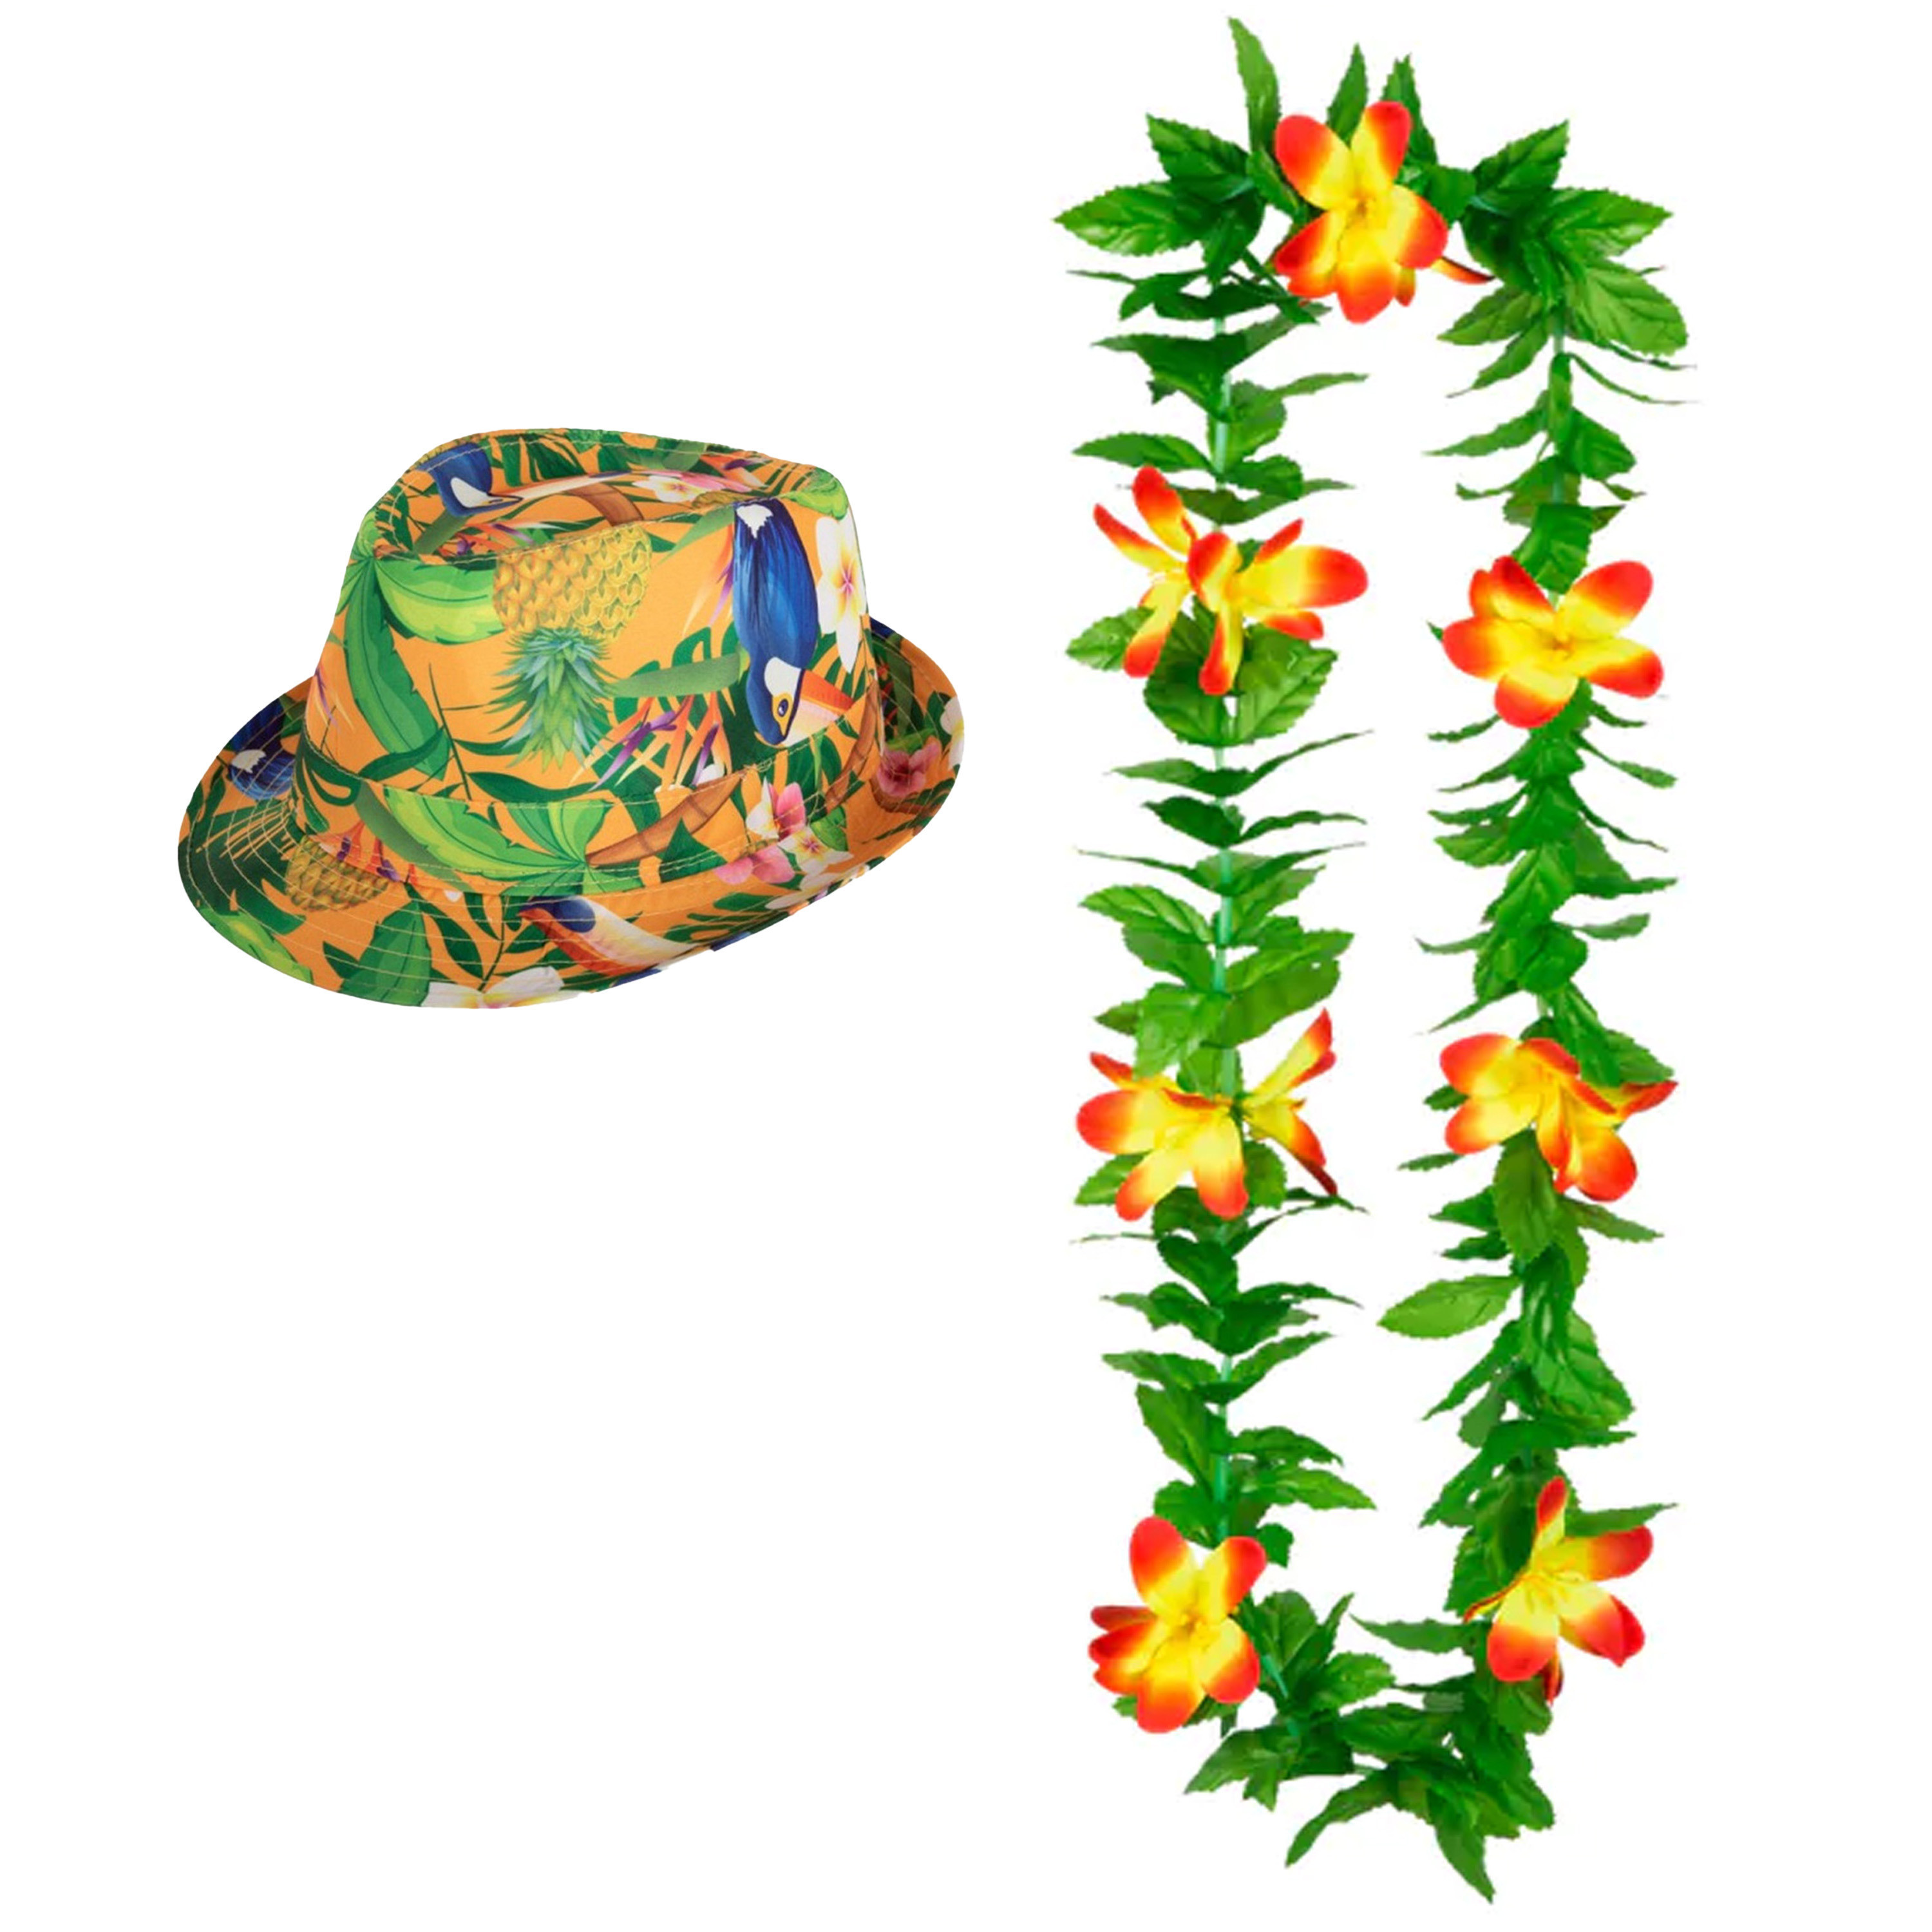 Hawaii thema party verkleedset - Hoedje Tropical print - bloemenkrans groen/geel - Tropical toppers